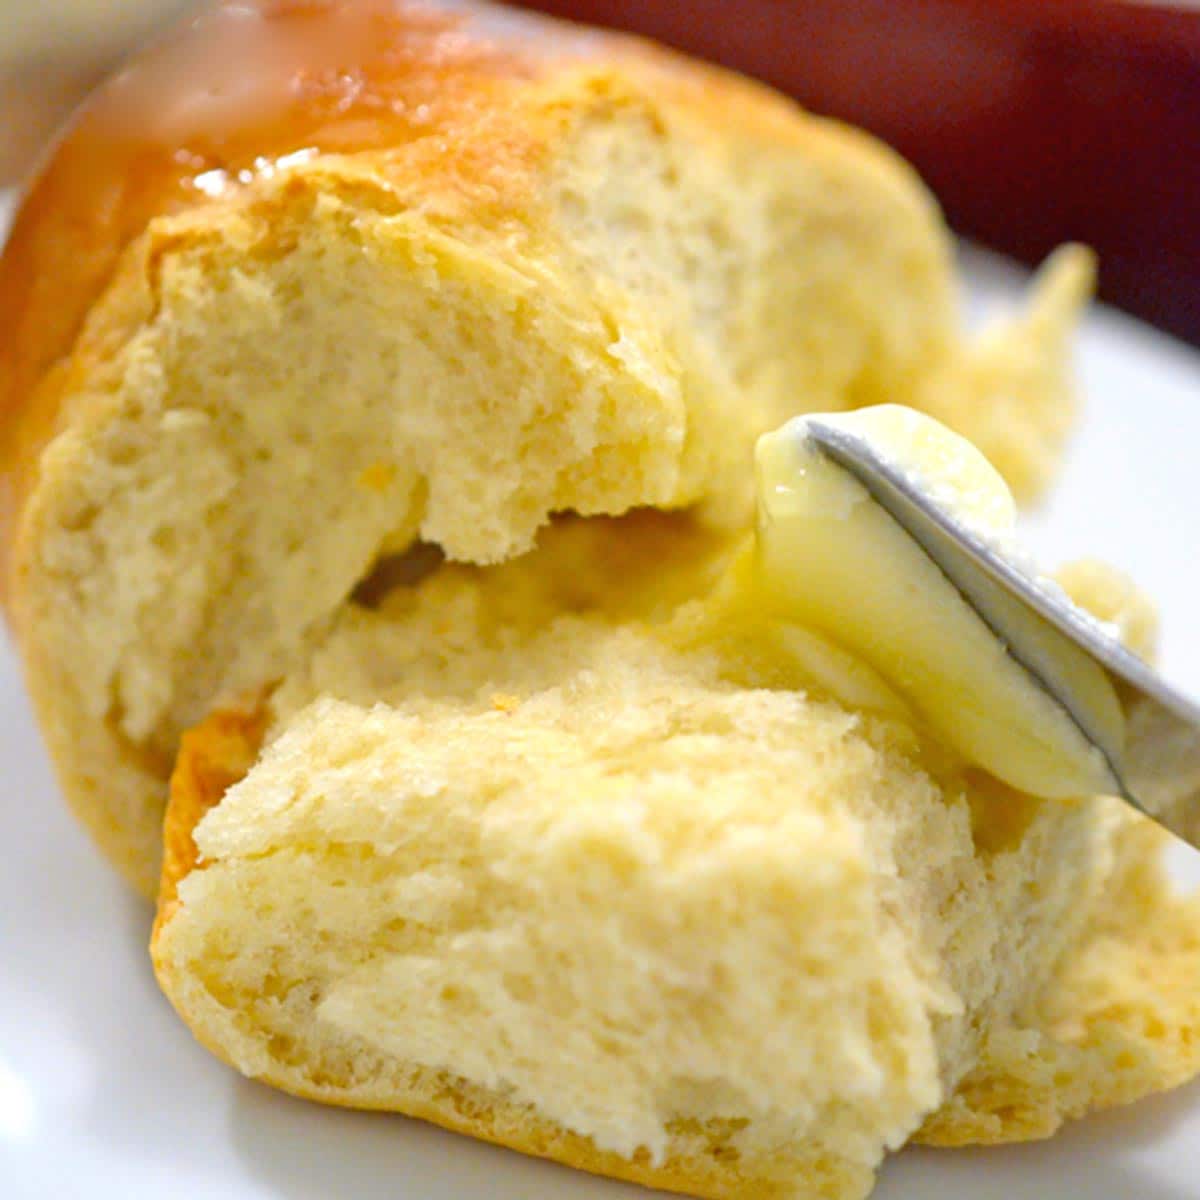 A dinner roll being buttered.